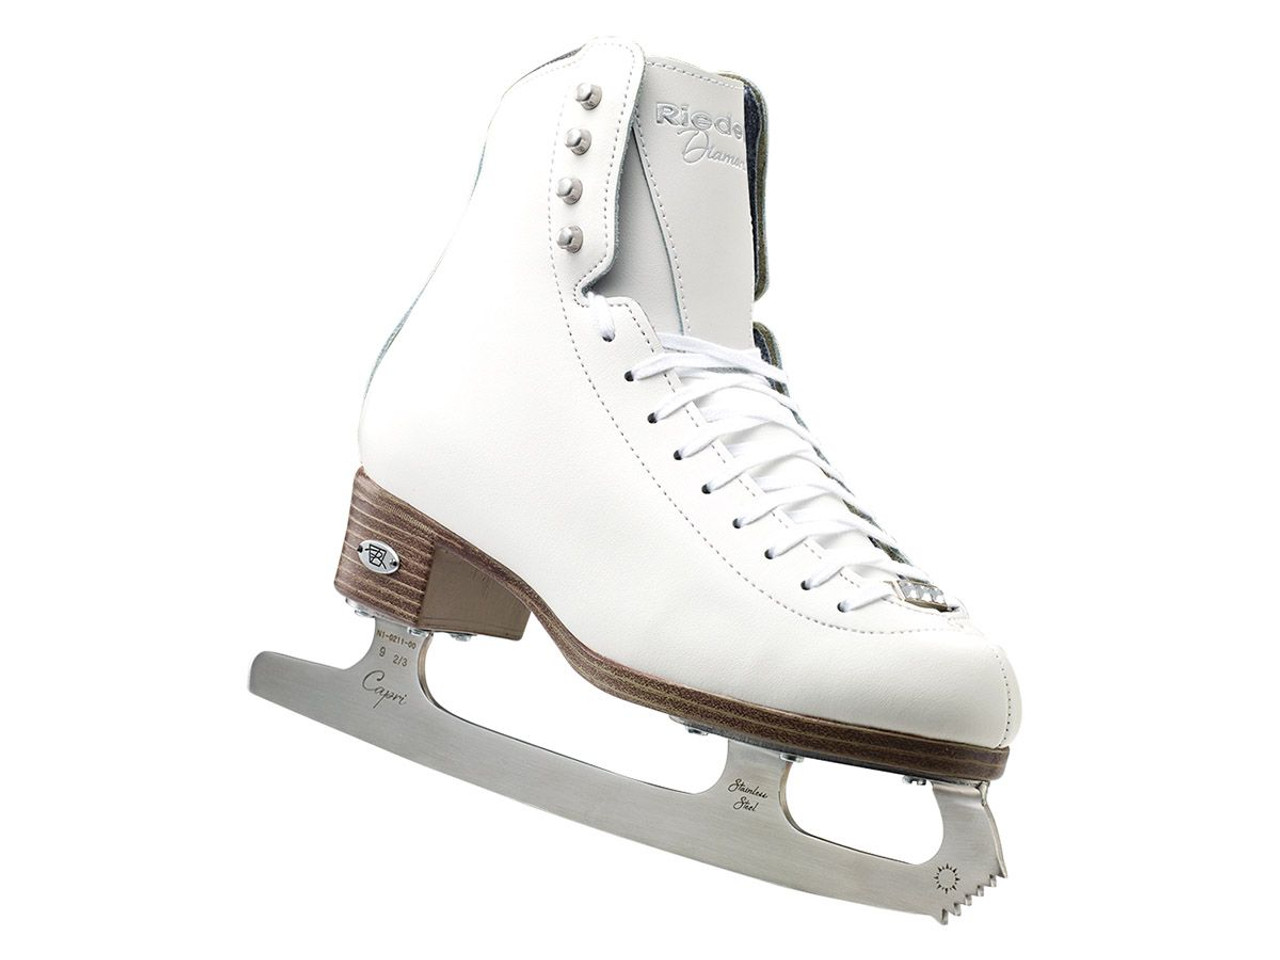 Riedell Ice Skates 33 Diamond Girls Shoes w/ Capri Blade - Pink